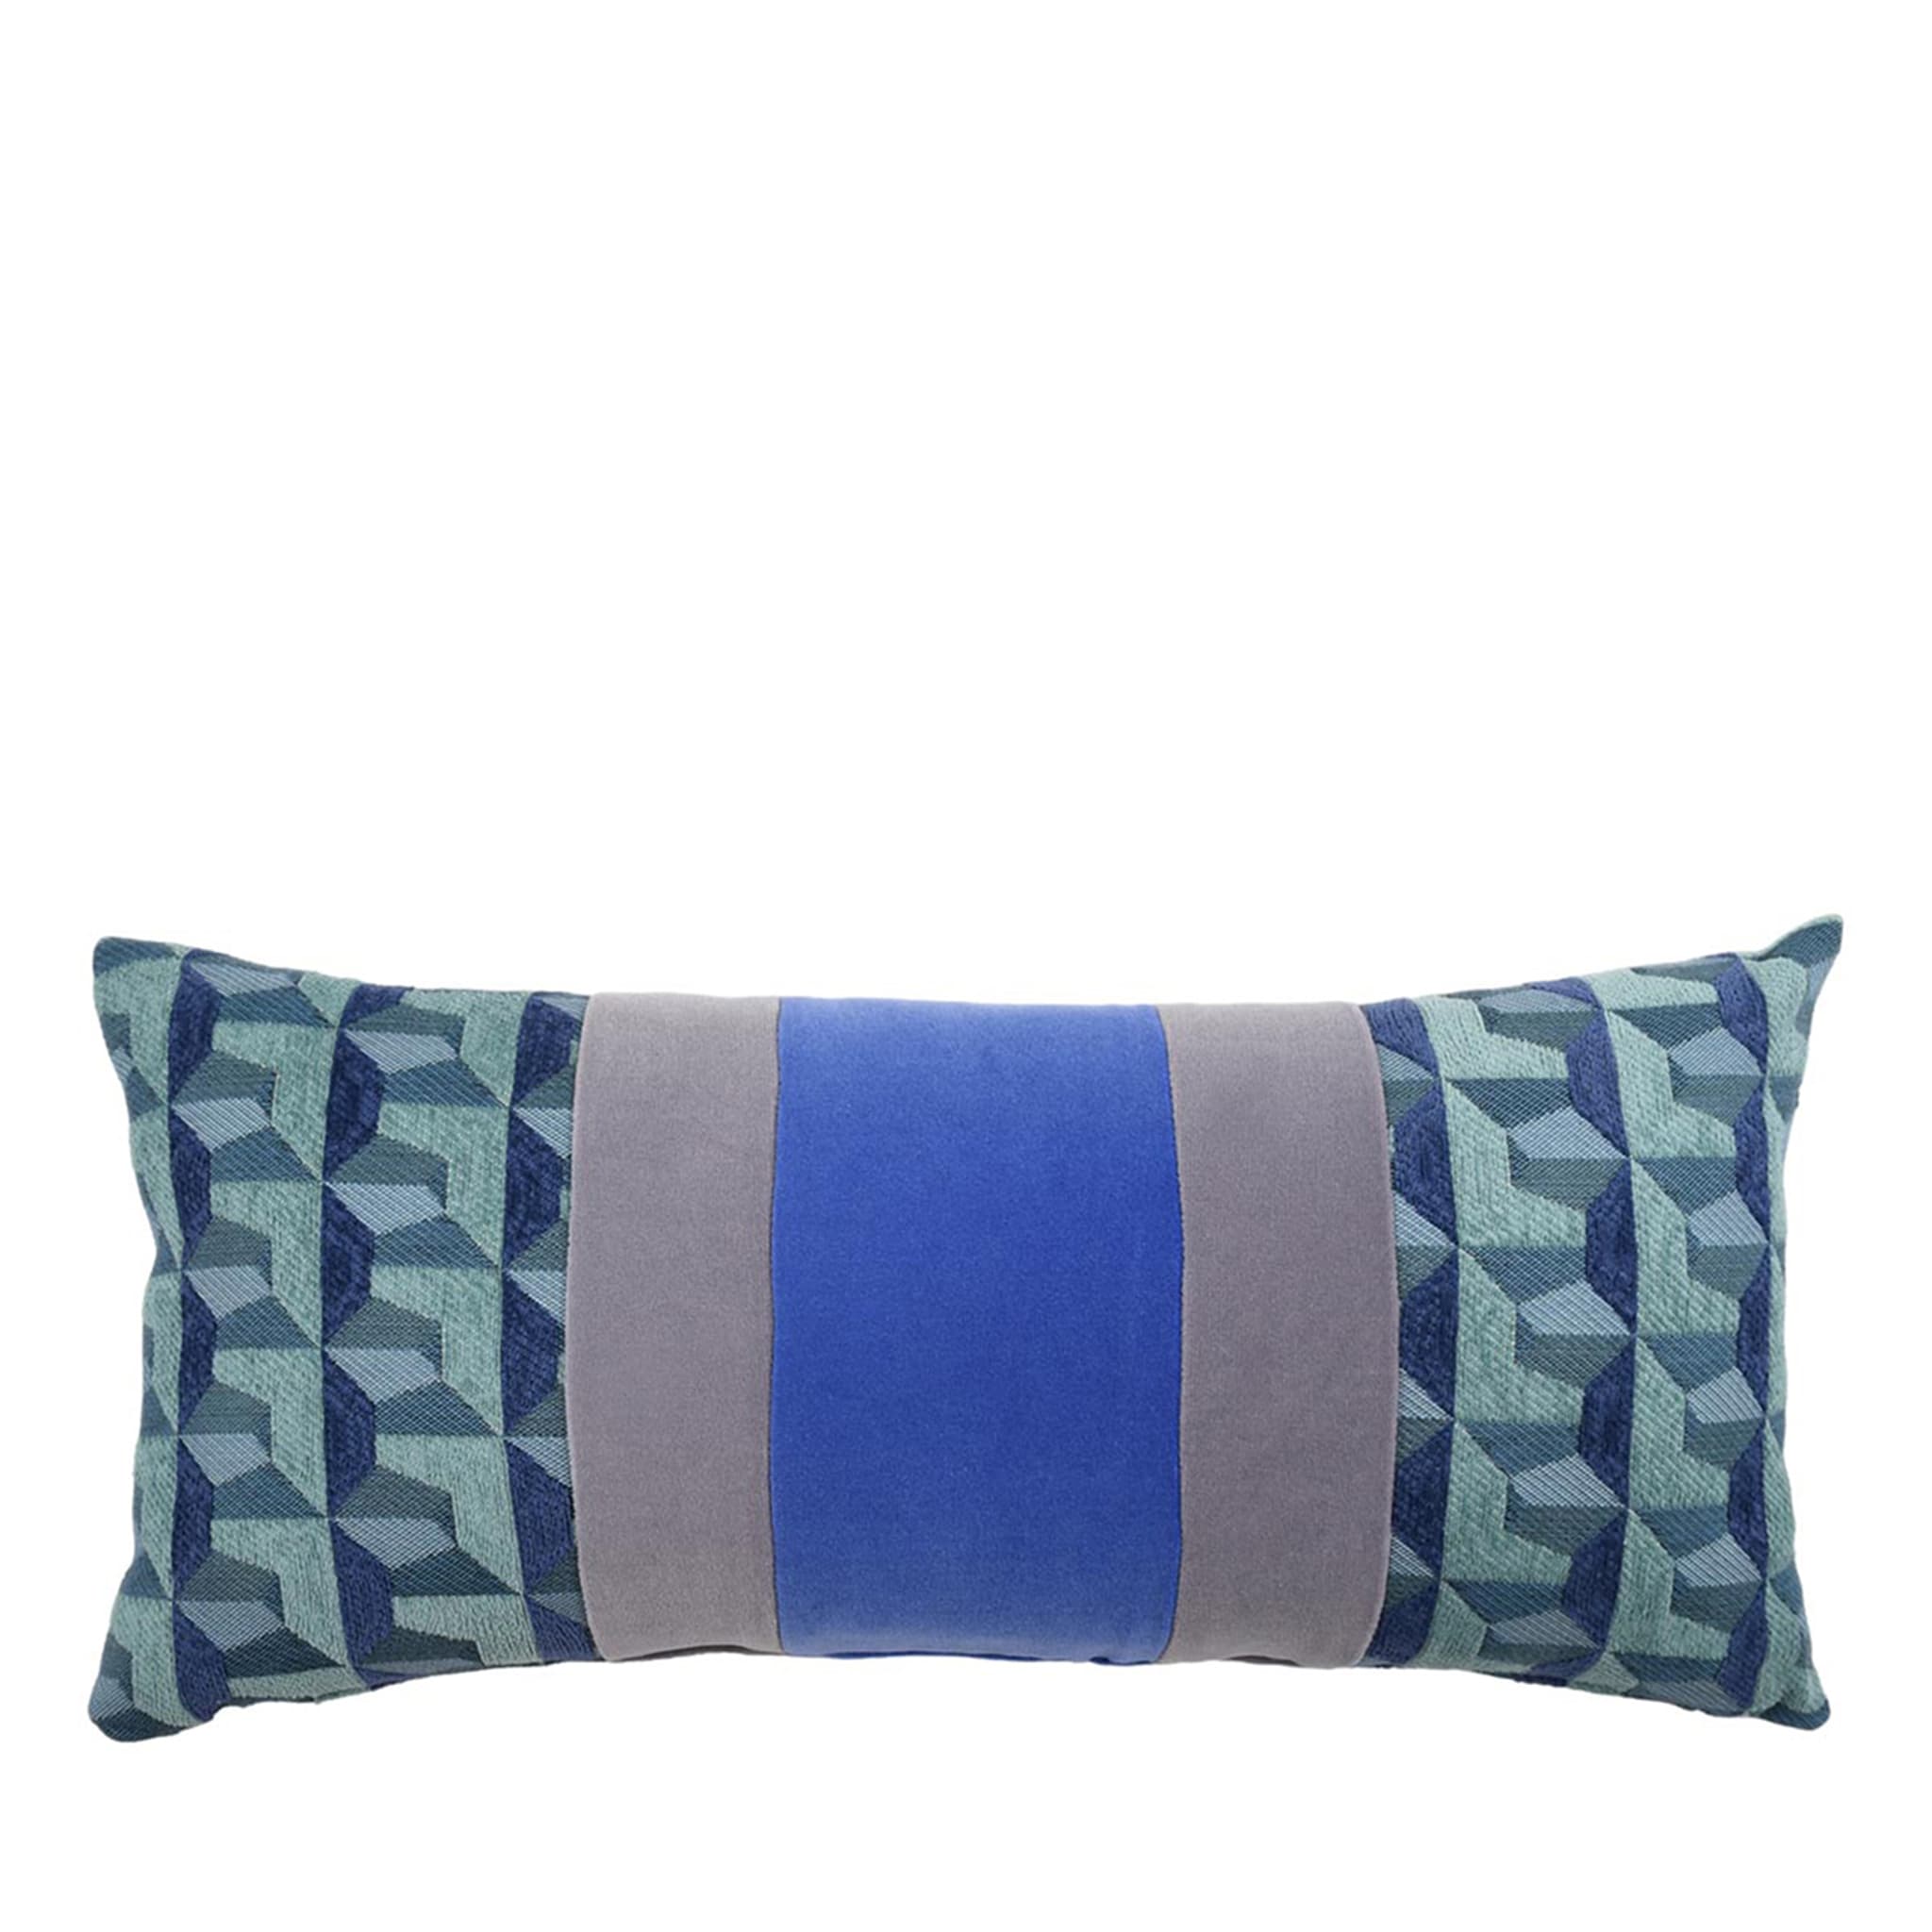 Rectangular Nastro Cushion in geometric jacquard fabric - Main view